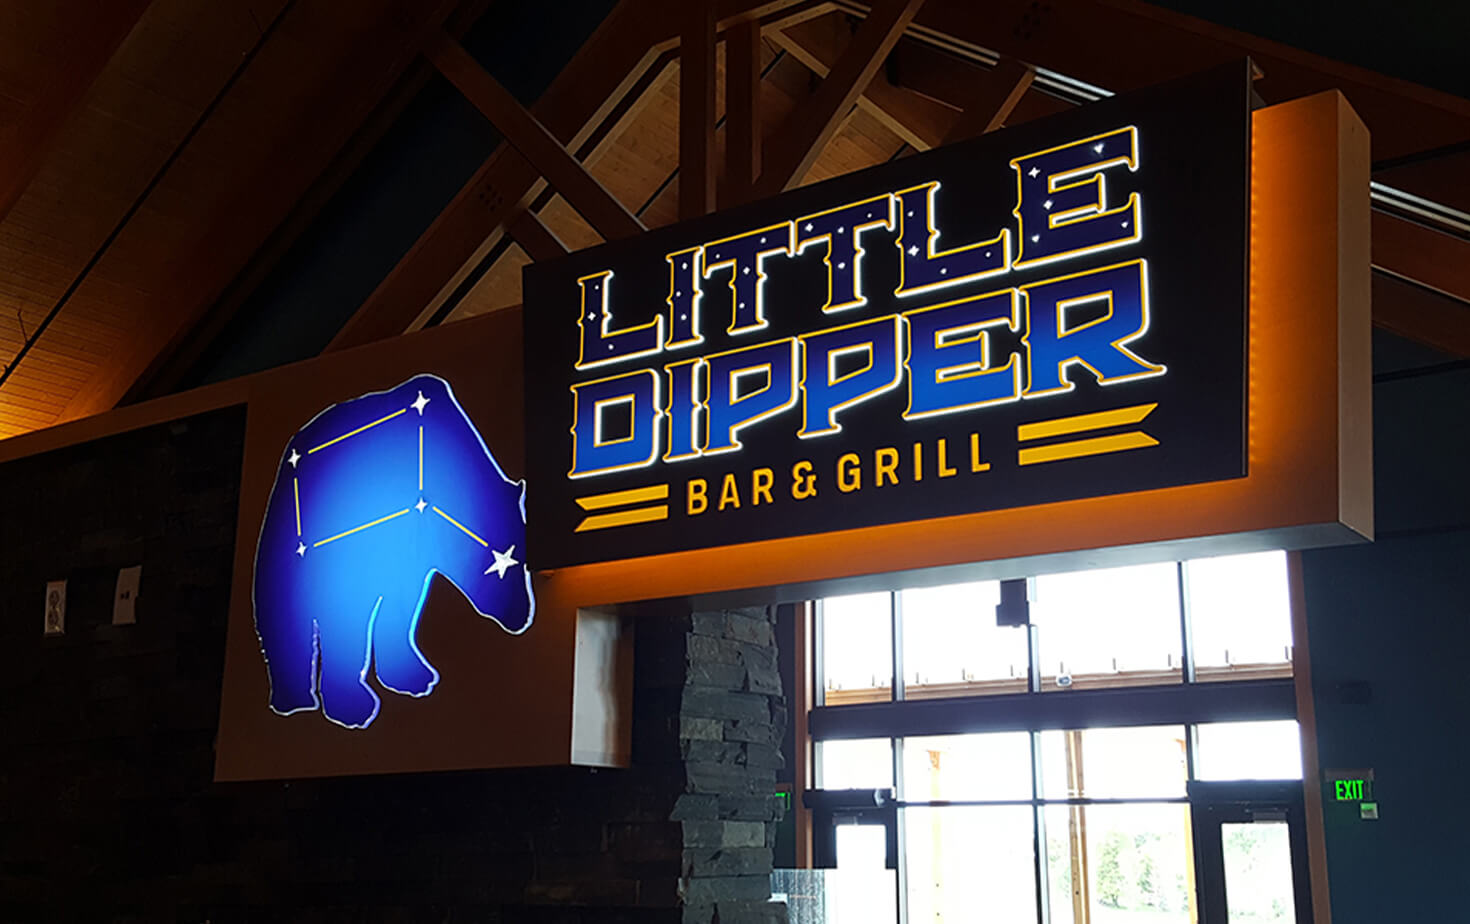 Shooting Start Casino Litter Dipper Bar and Grill Custom Dynamic Illuminated Interior Sign